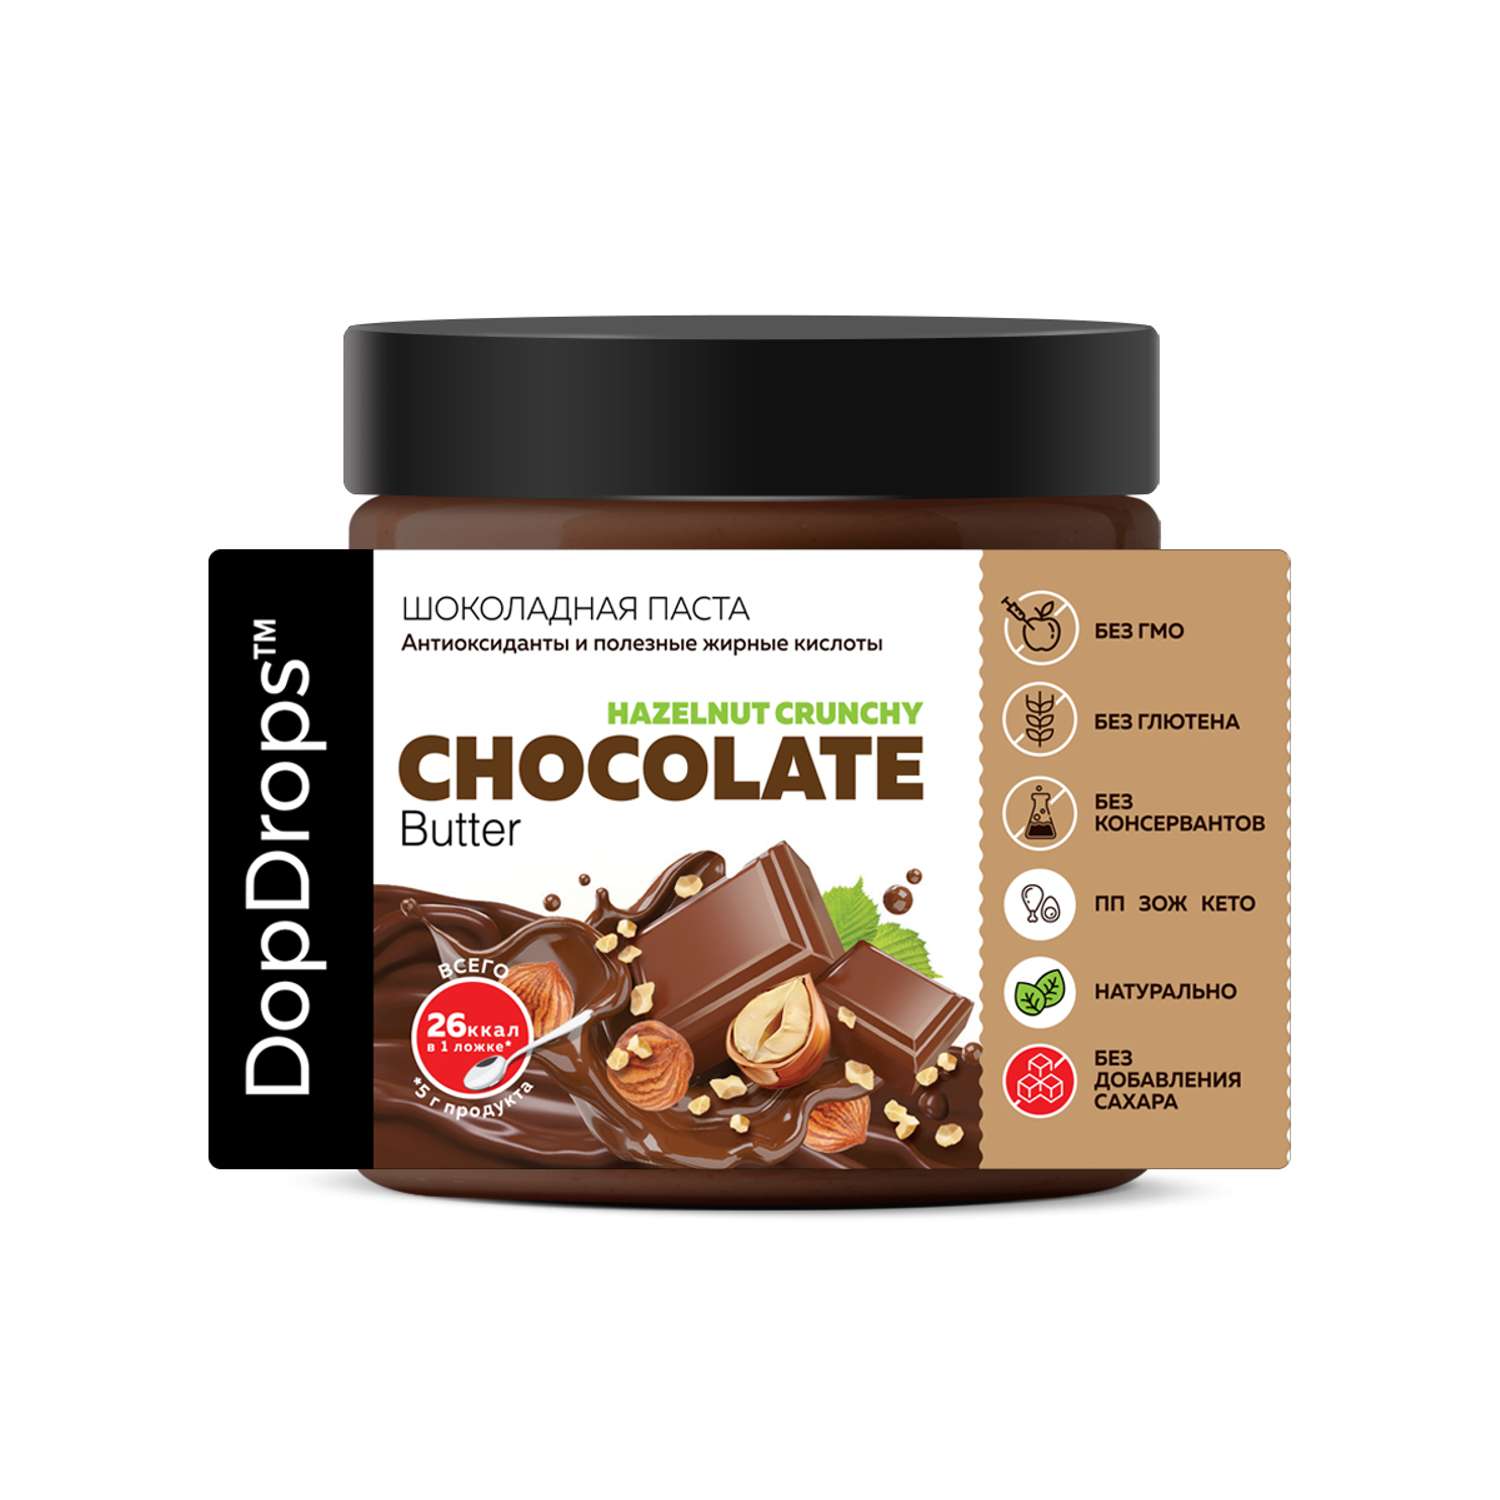 Шоколадная паста DopDrops с кусочками фундука 500 г - фото 4